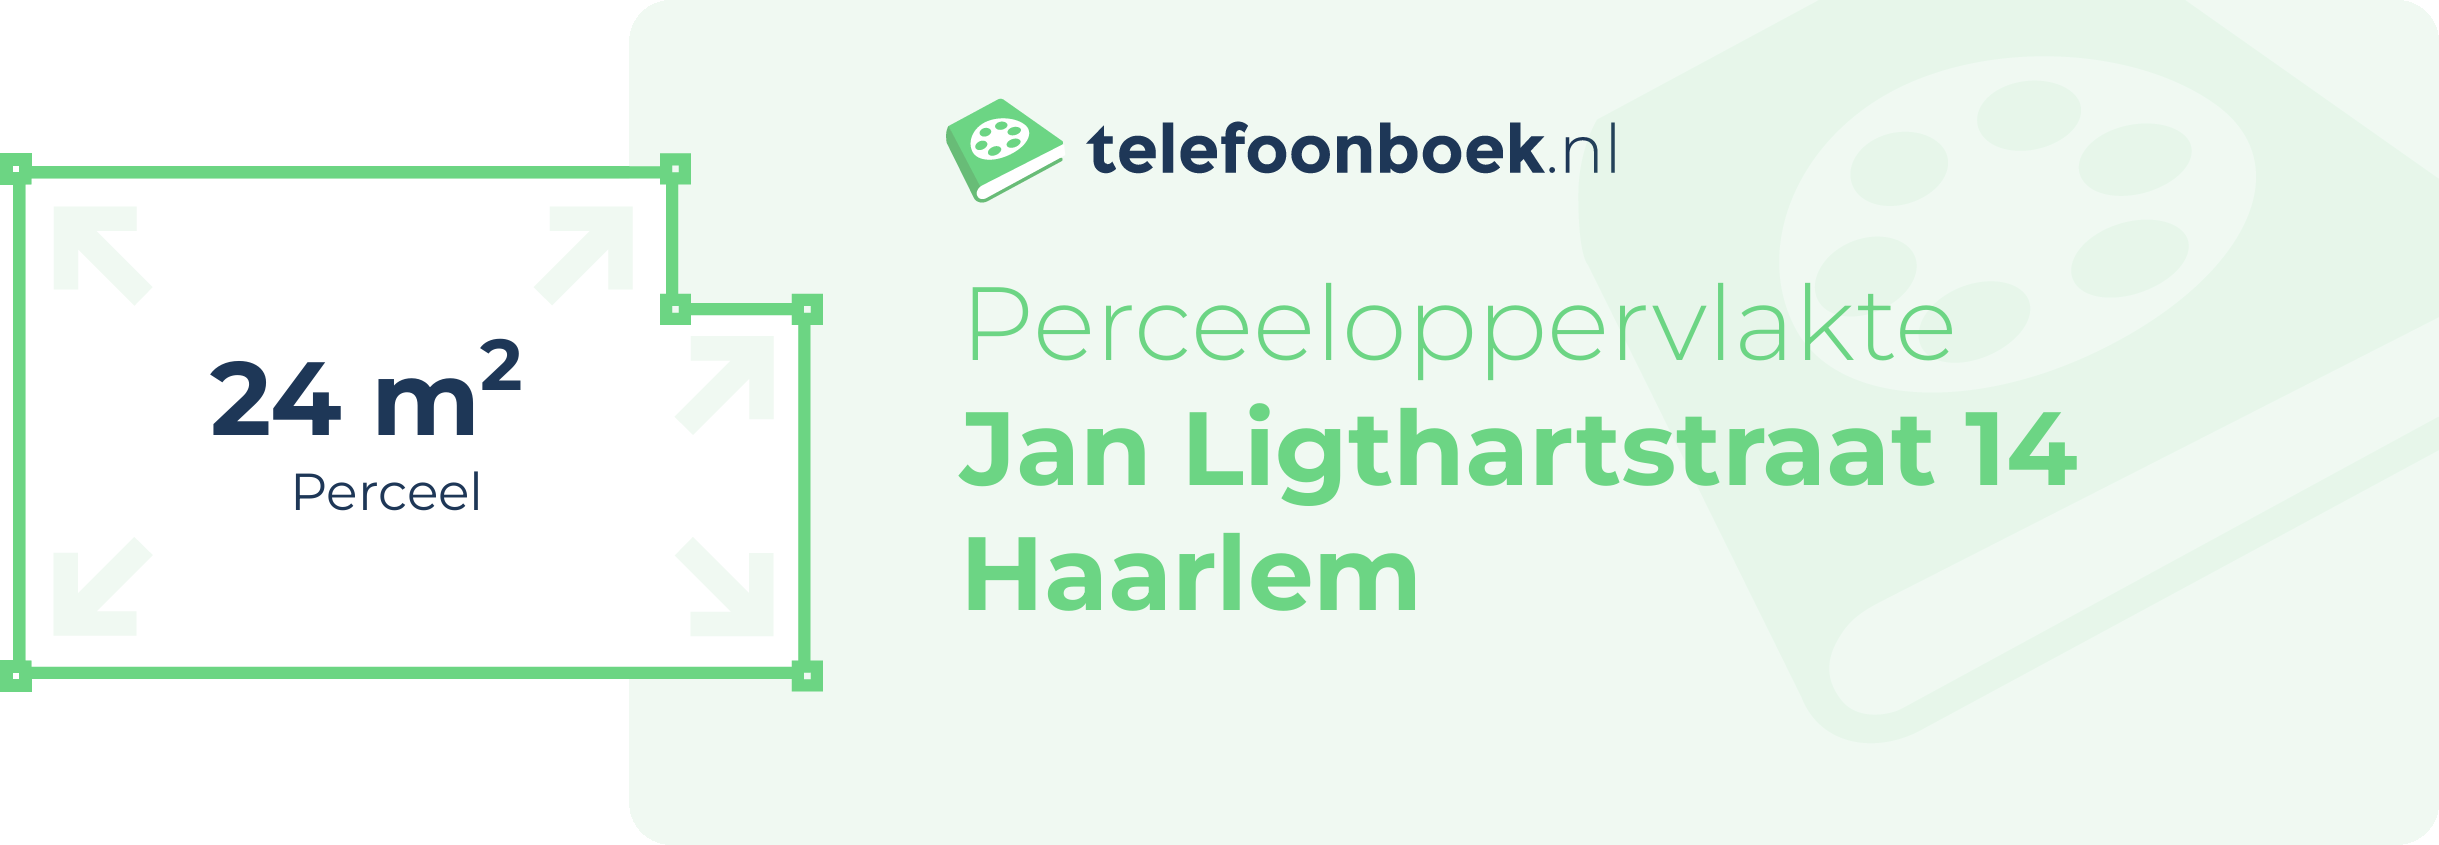 Perceeloppervlakte Jan Ligthartstraat 14 Haarlem